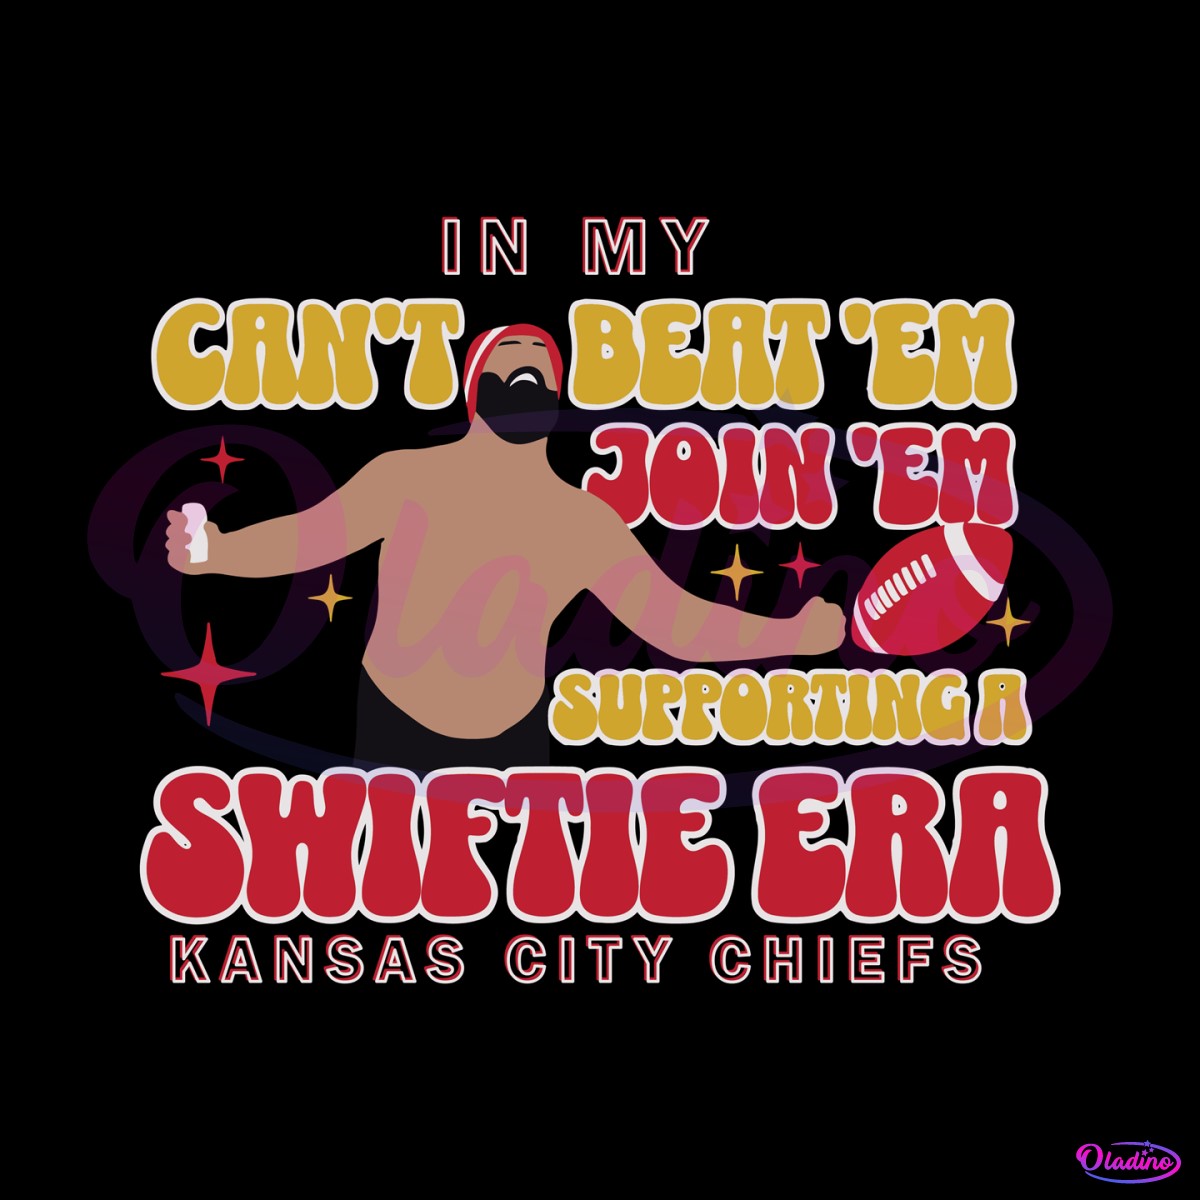 supporting-a-swiftie-era-kansas-city-chiefs-svg